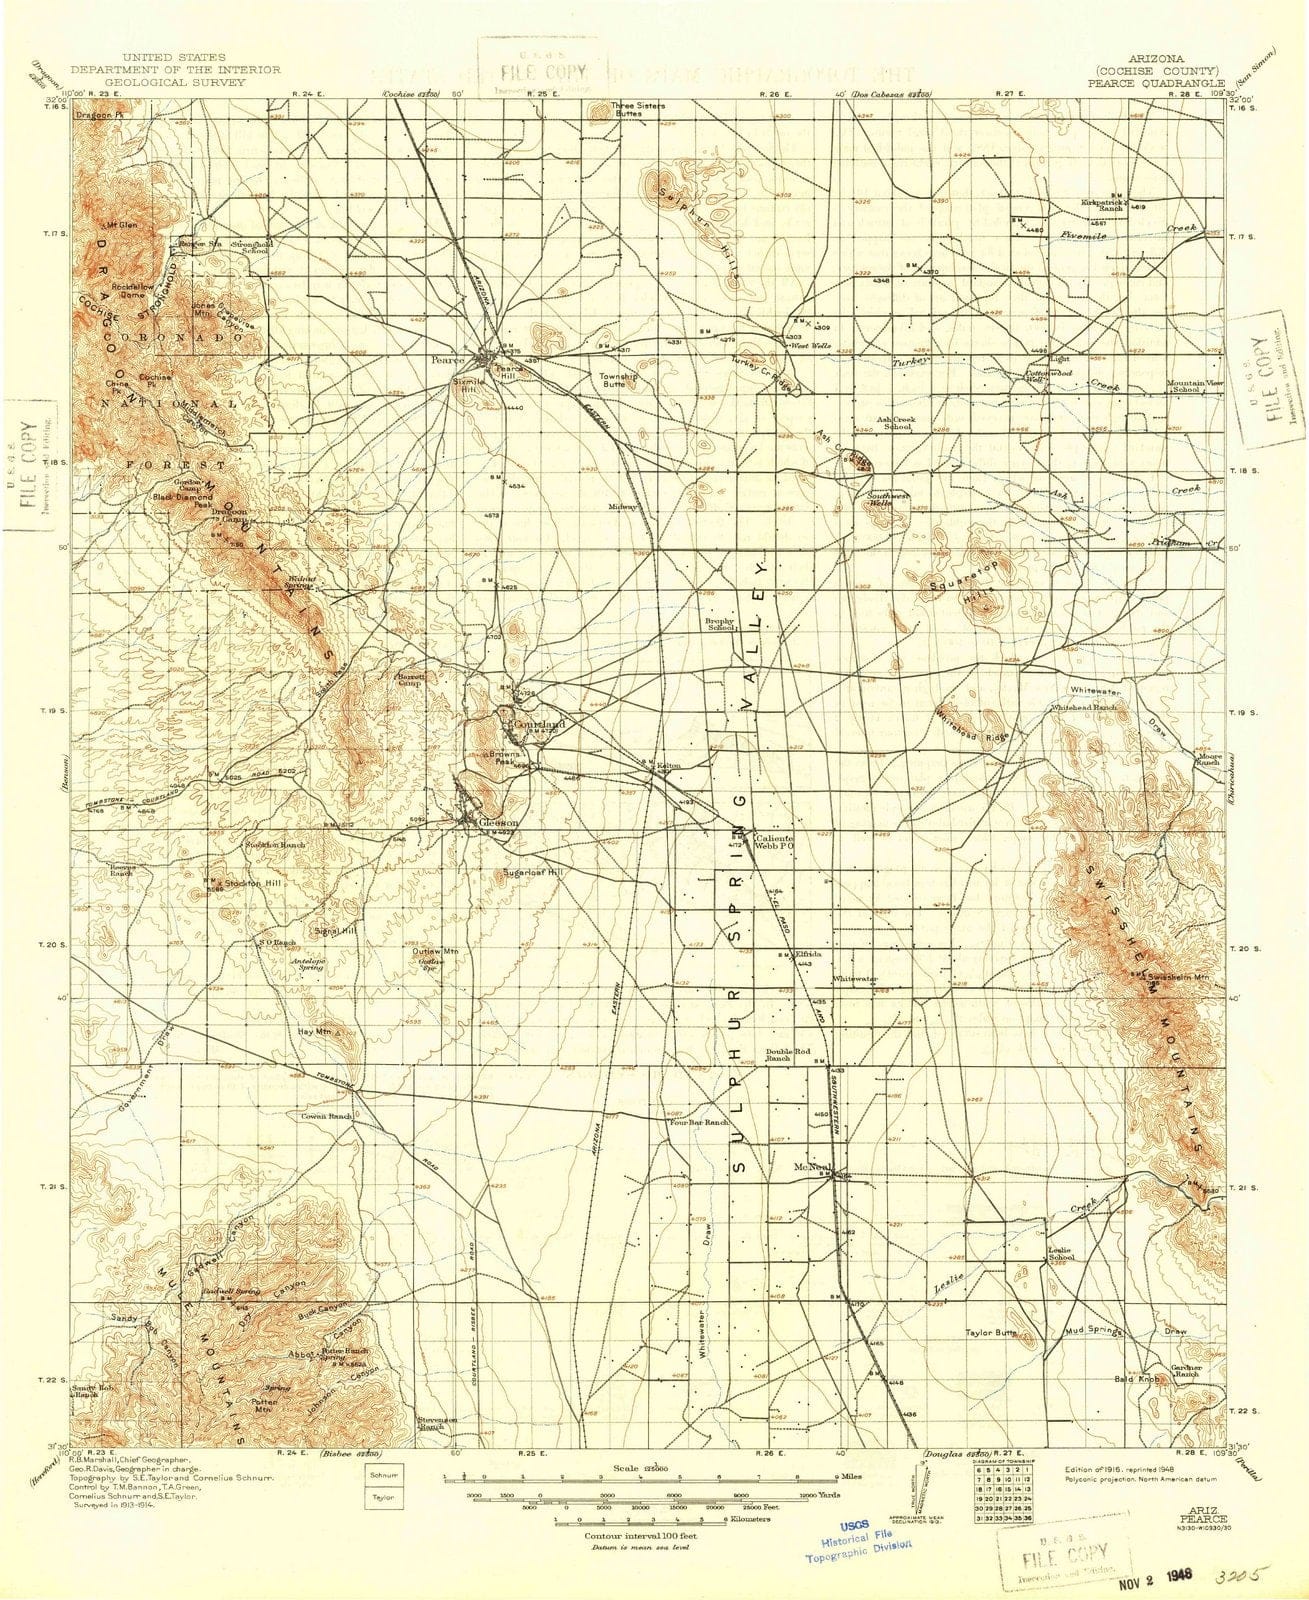 1916 Pearce, AZ - Arizona - USGS Topographic Map